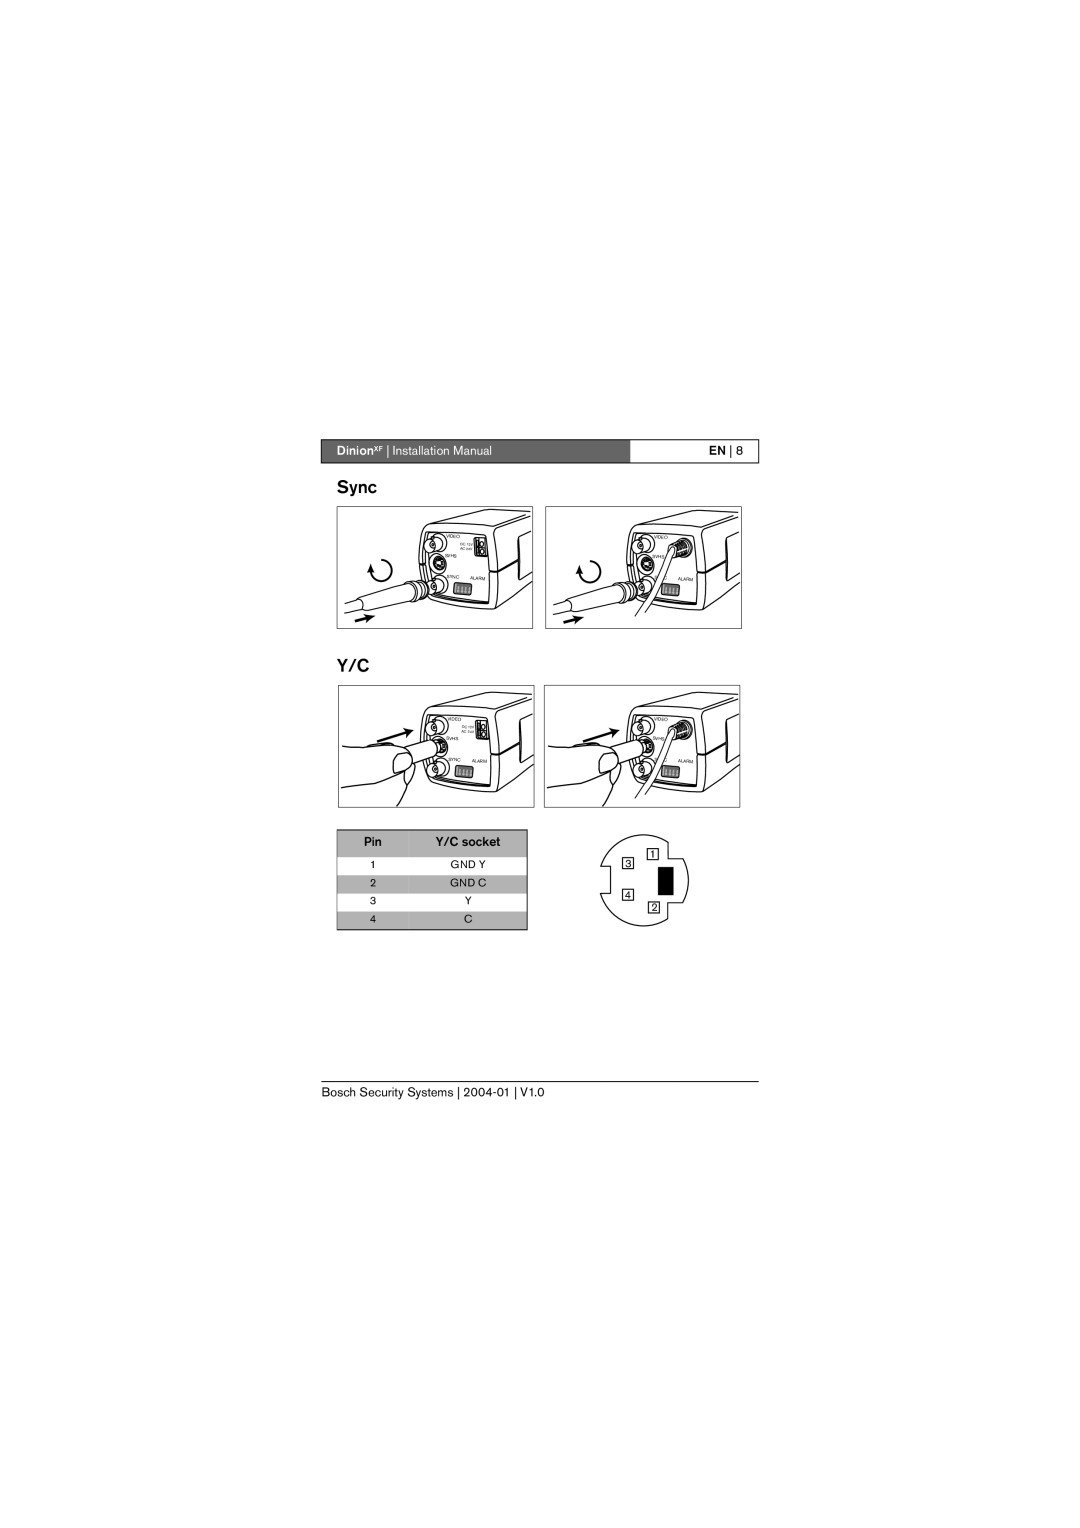 Bosch Appliances LTC 0495 Sync, Y/C socket, DinionXF Installation Manual, En, Bosch Security Systems, Svhs, Alarm, Video 